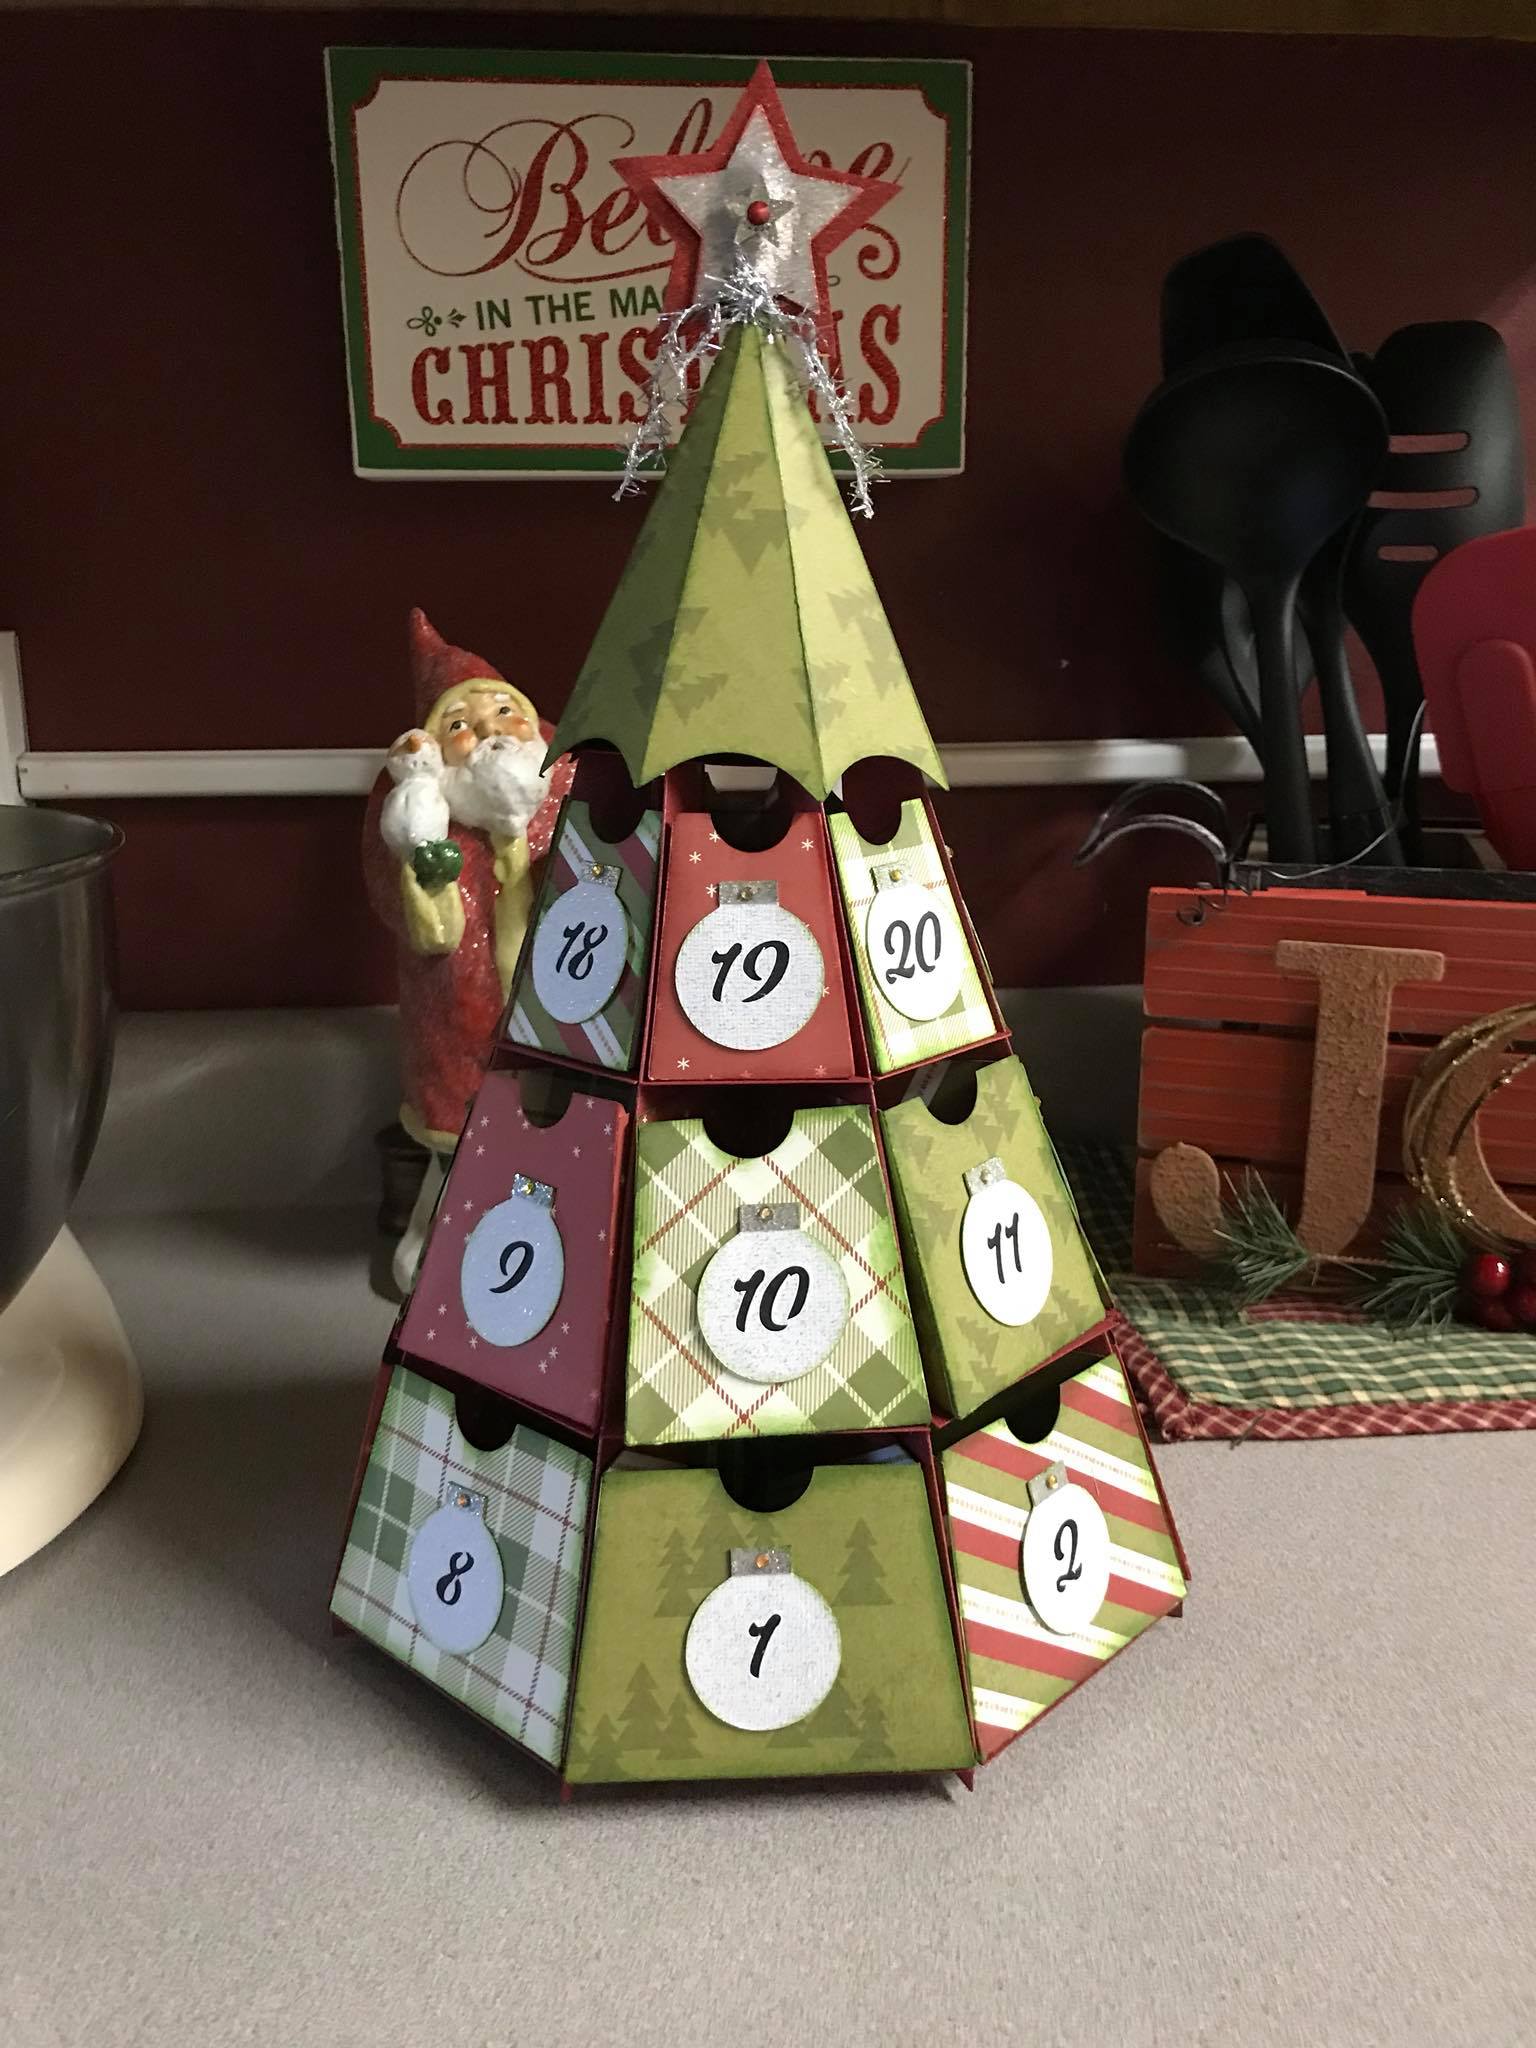 Christmas Tree Advent Calendar: 25 Days of Maker Projects Jennifer Maker